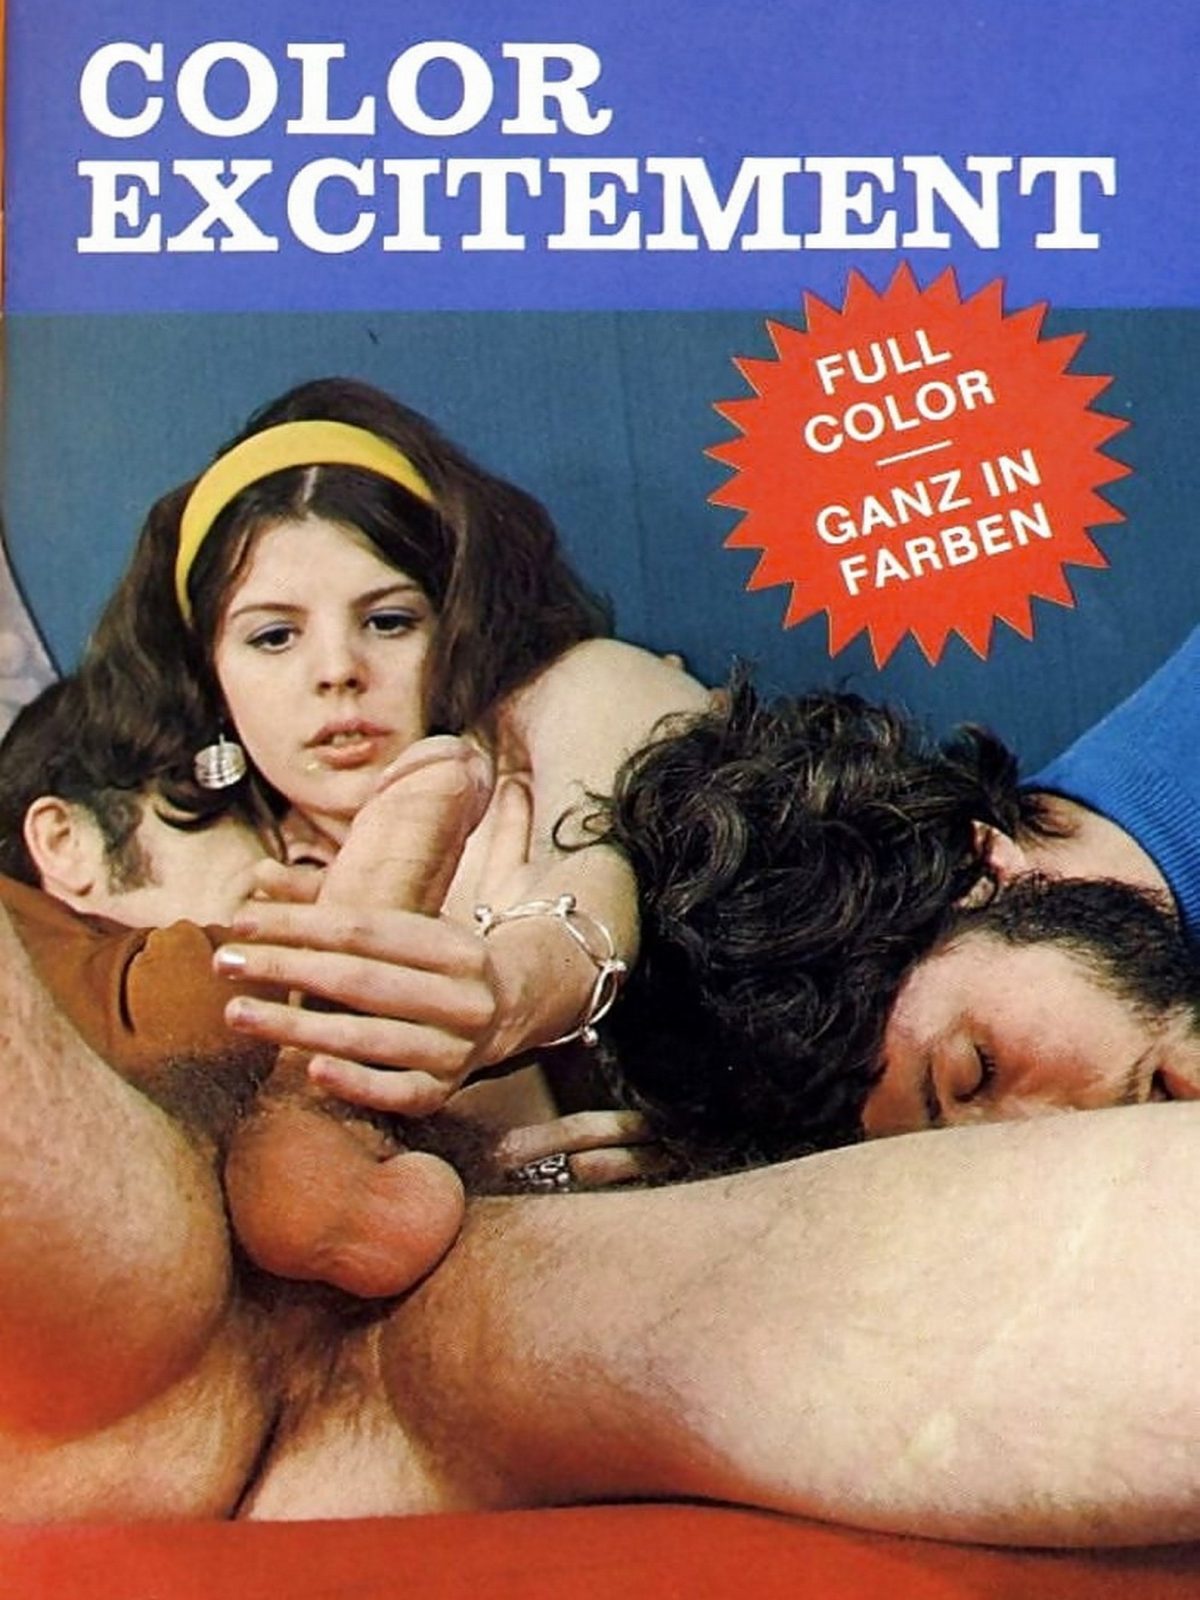 Vintage Porn - Blowjob & Pussy Sex - Retro Adult Magazine